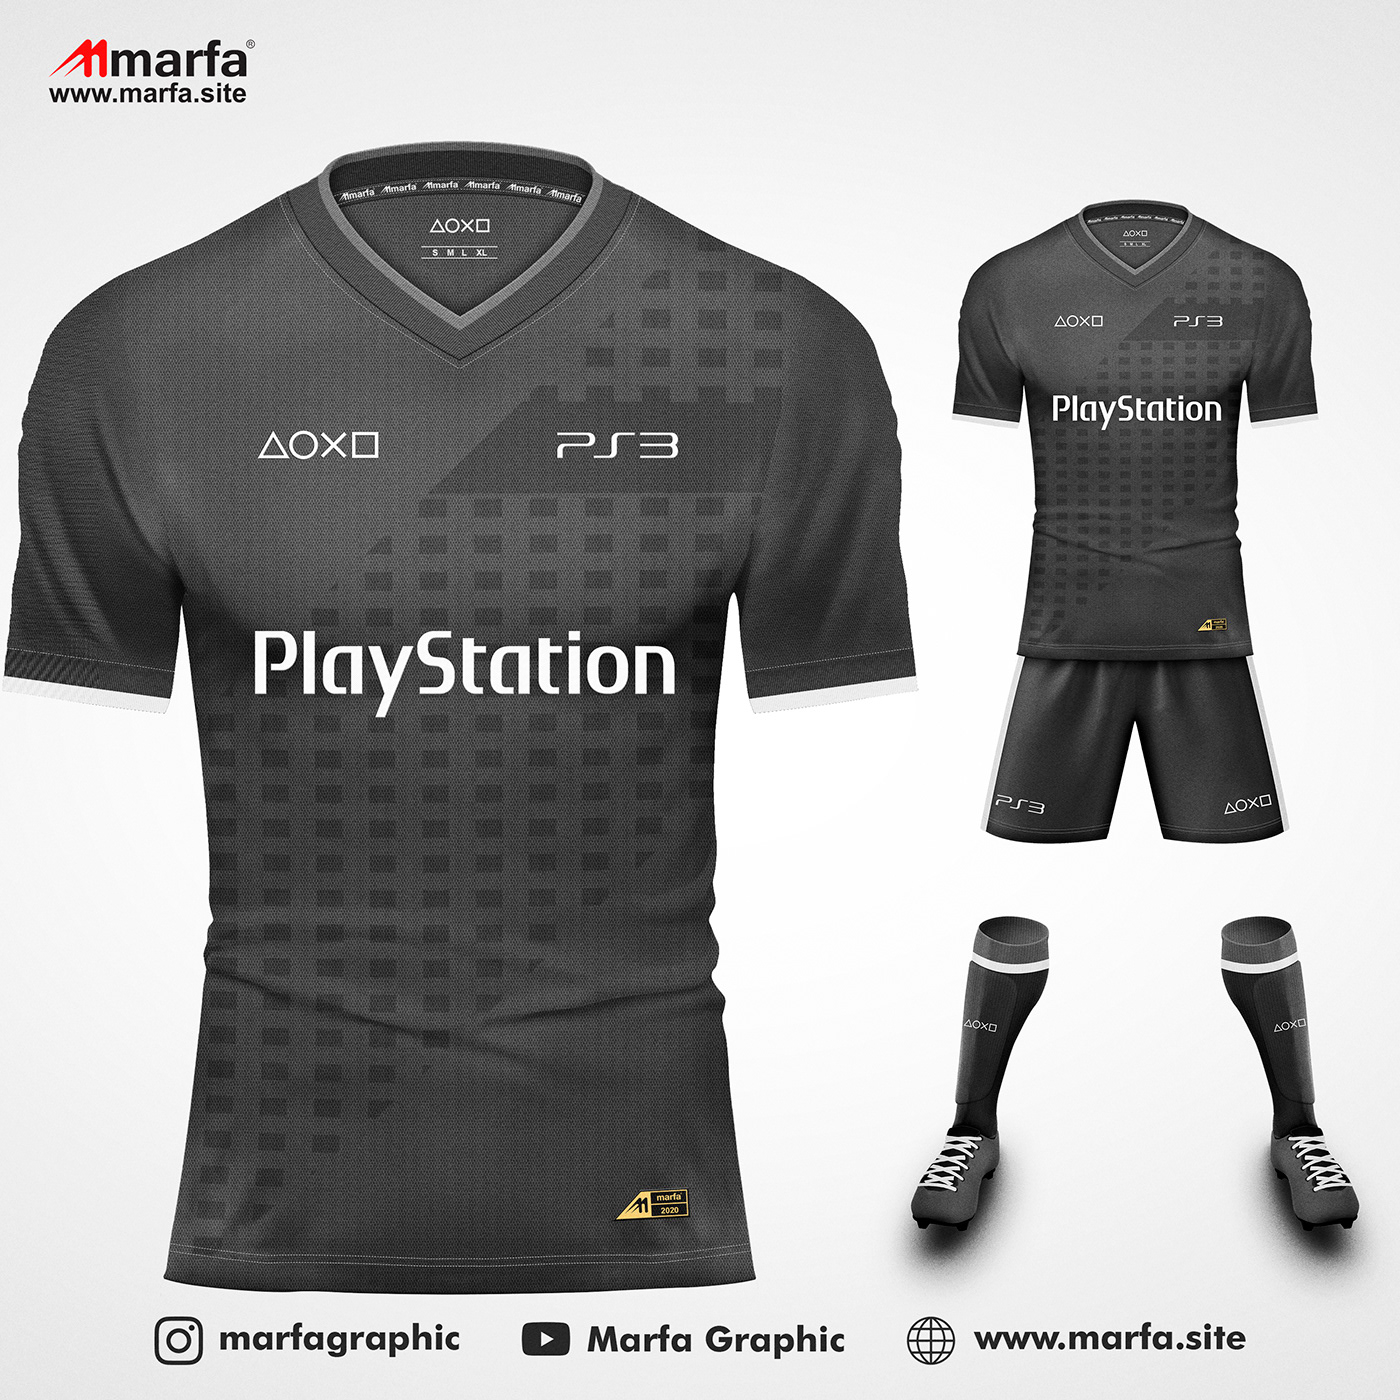 fantasy jersey fantasy kit playstation playstation 2 playstation 3 playstation 4 PlayStation 5 ps one ps5